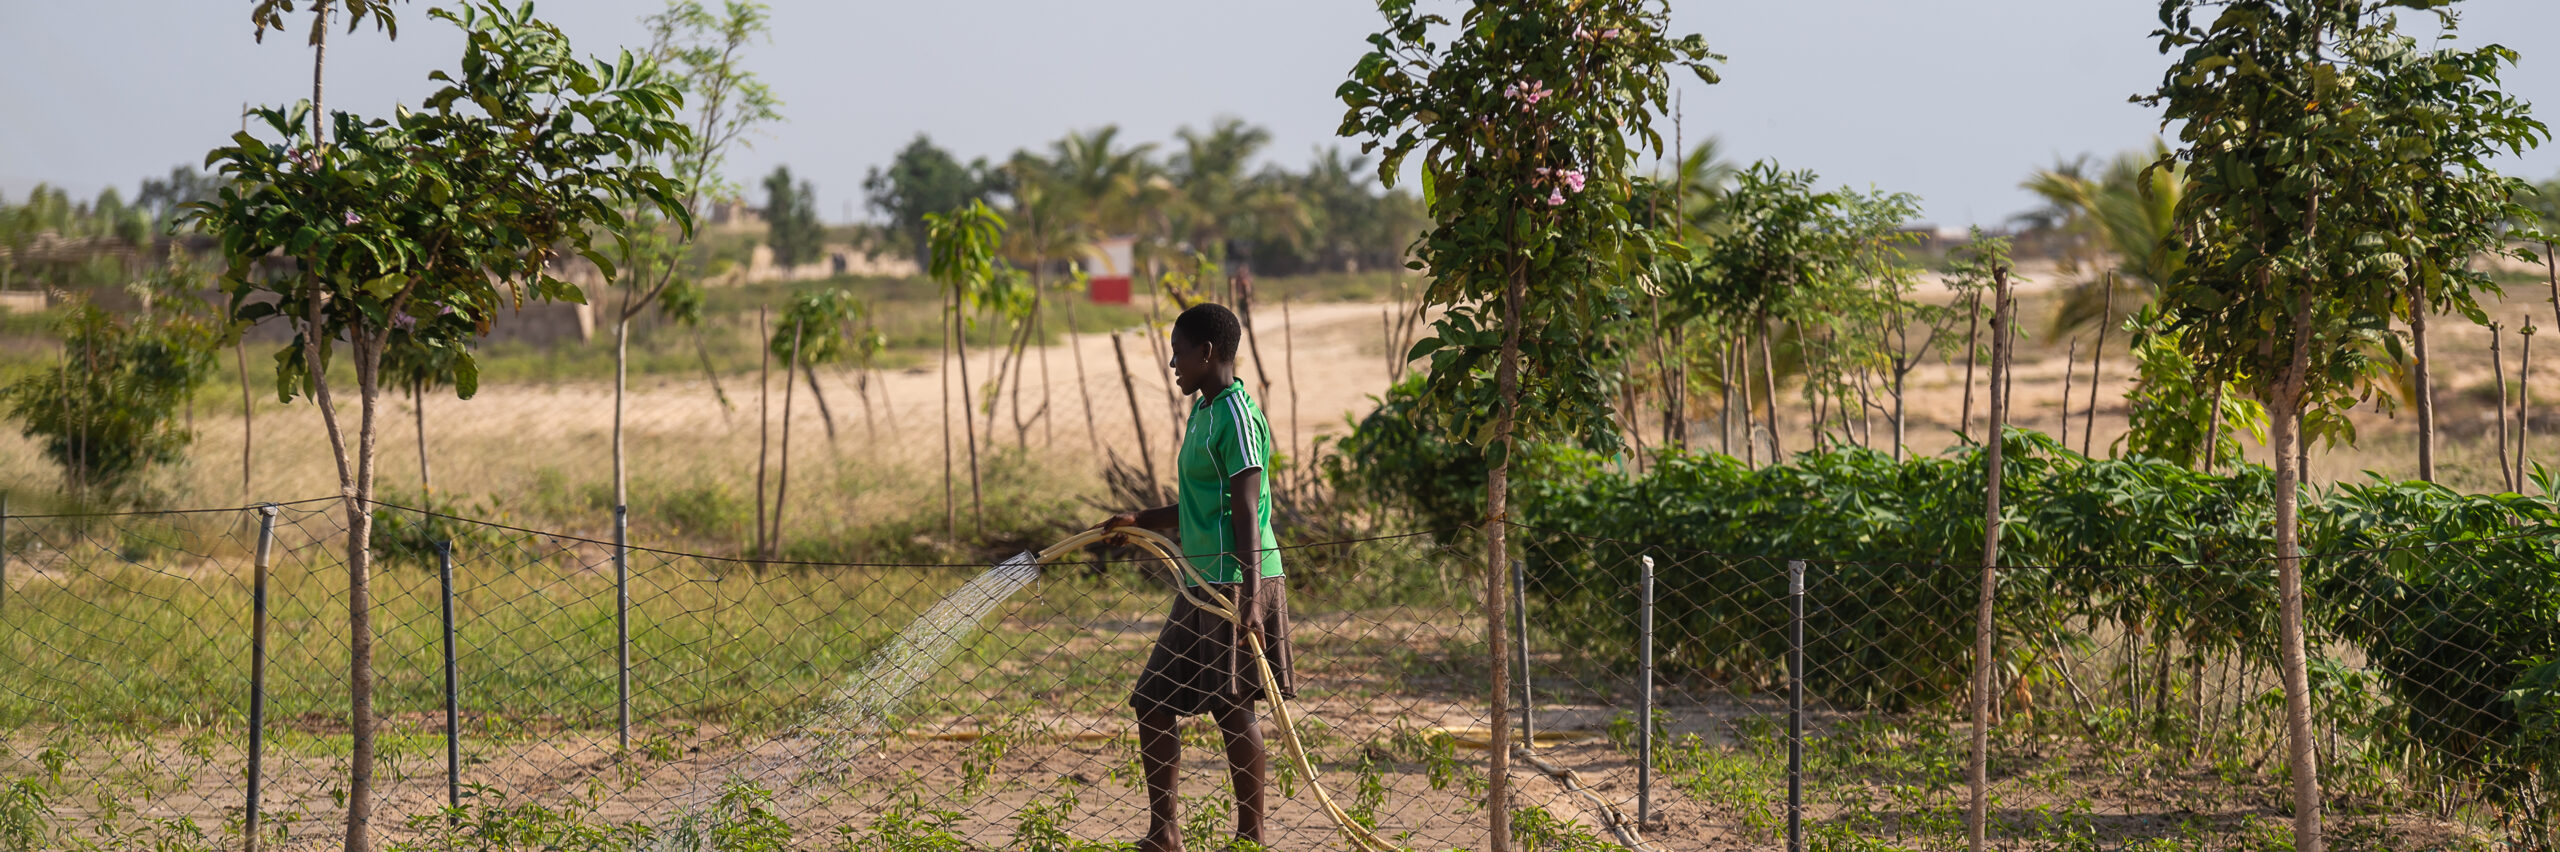 Woman watering land.